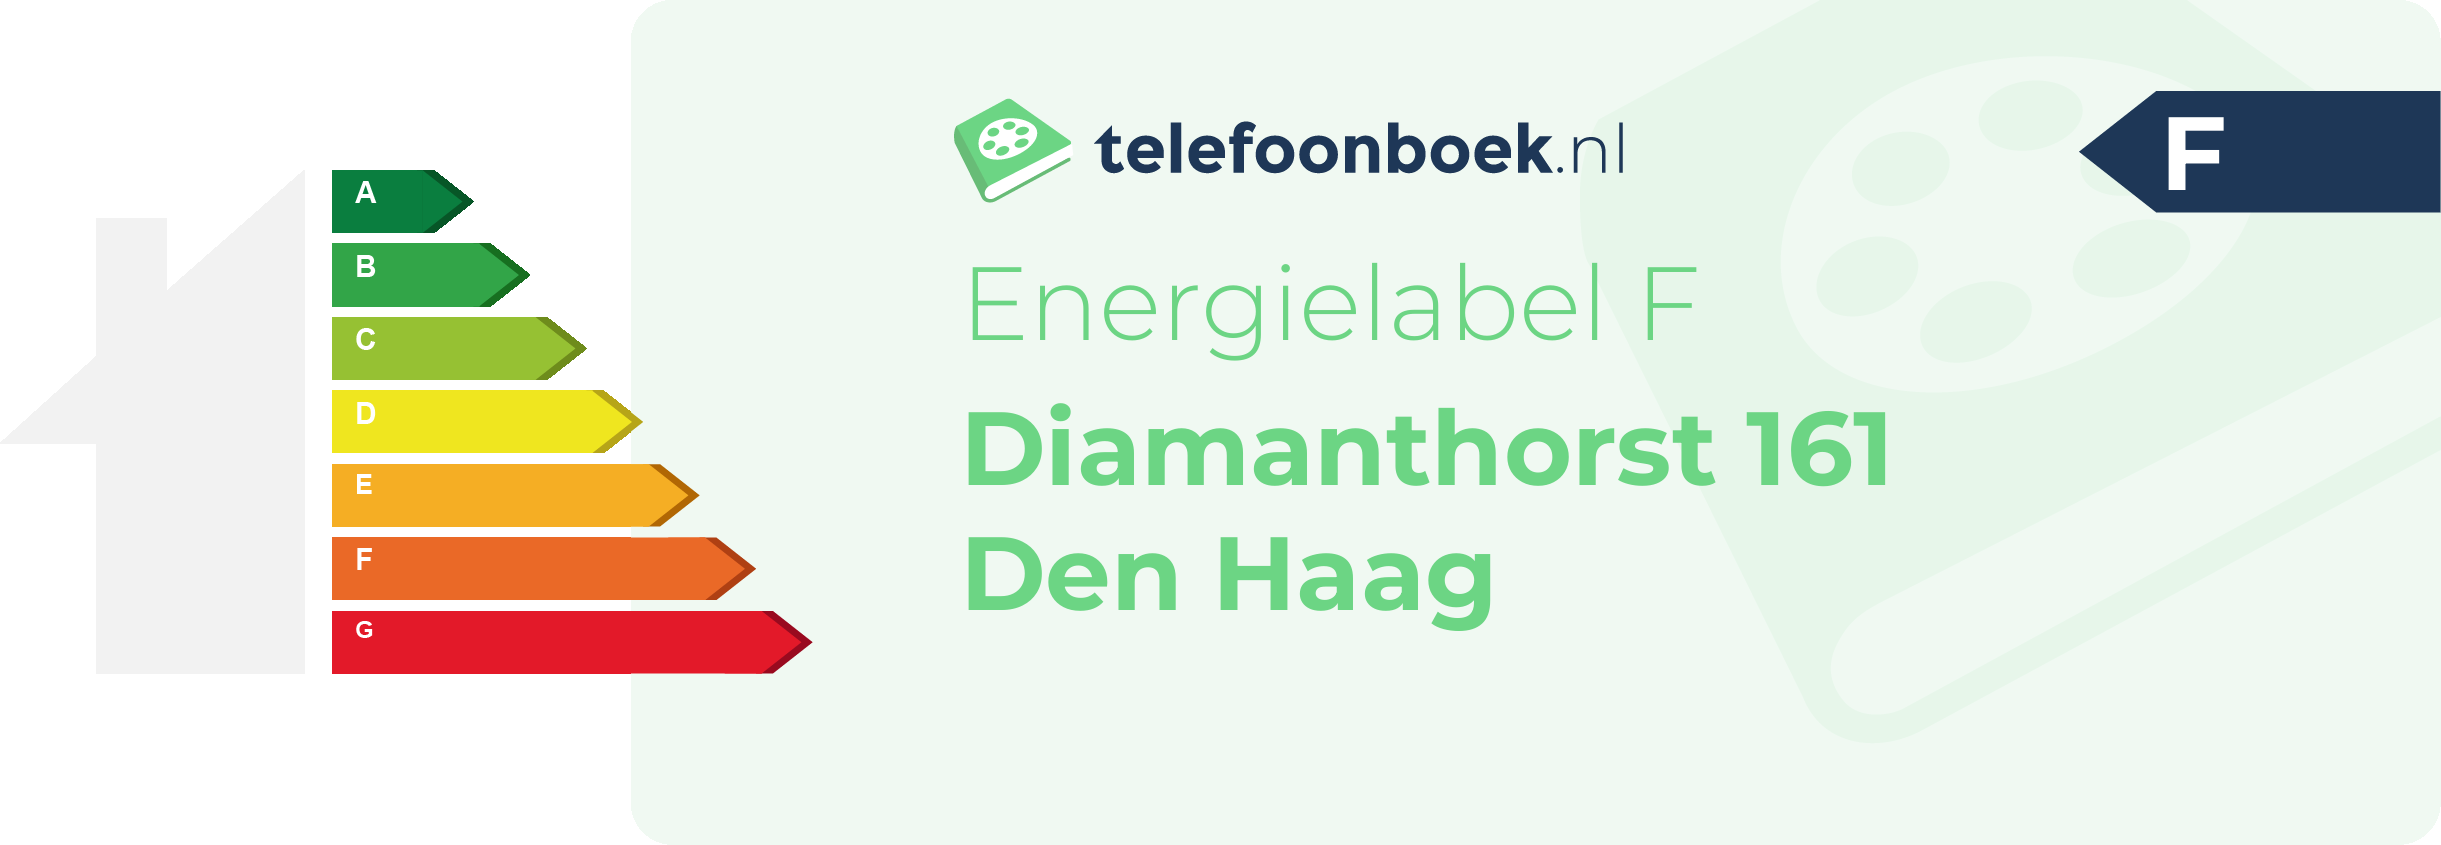 Energielabel Diamanthorst 161 Den Haag